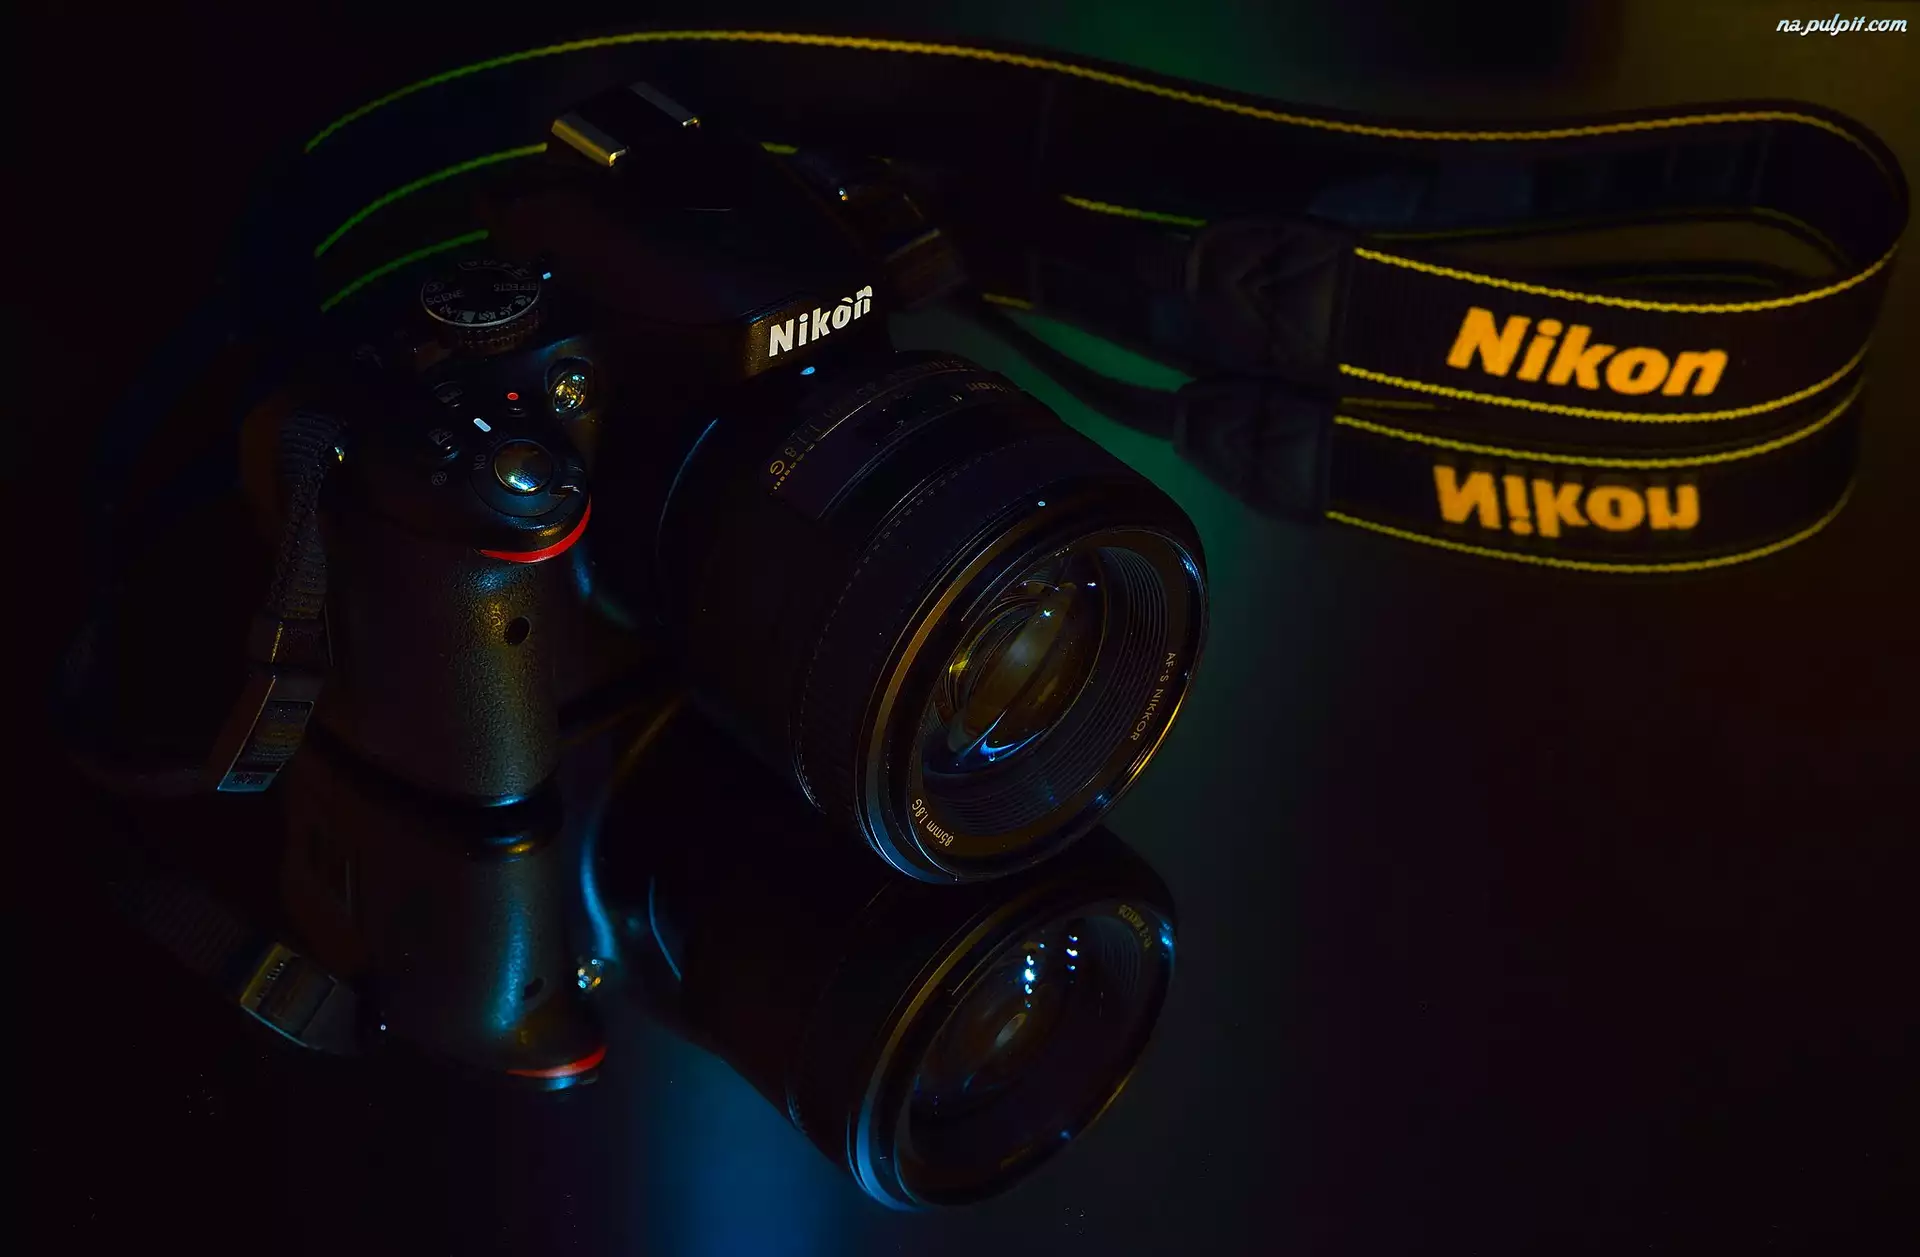 Nikon D5100, Aparat fotograficzny